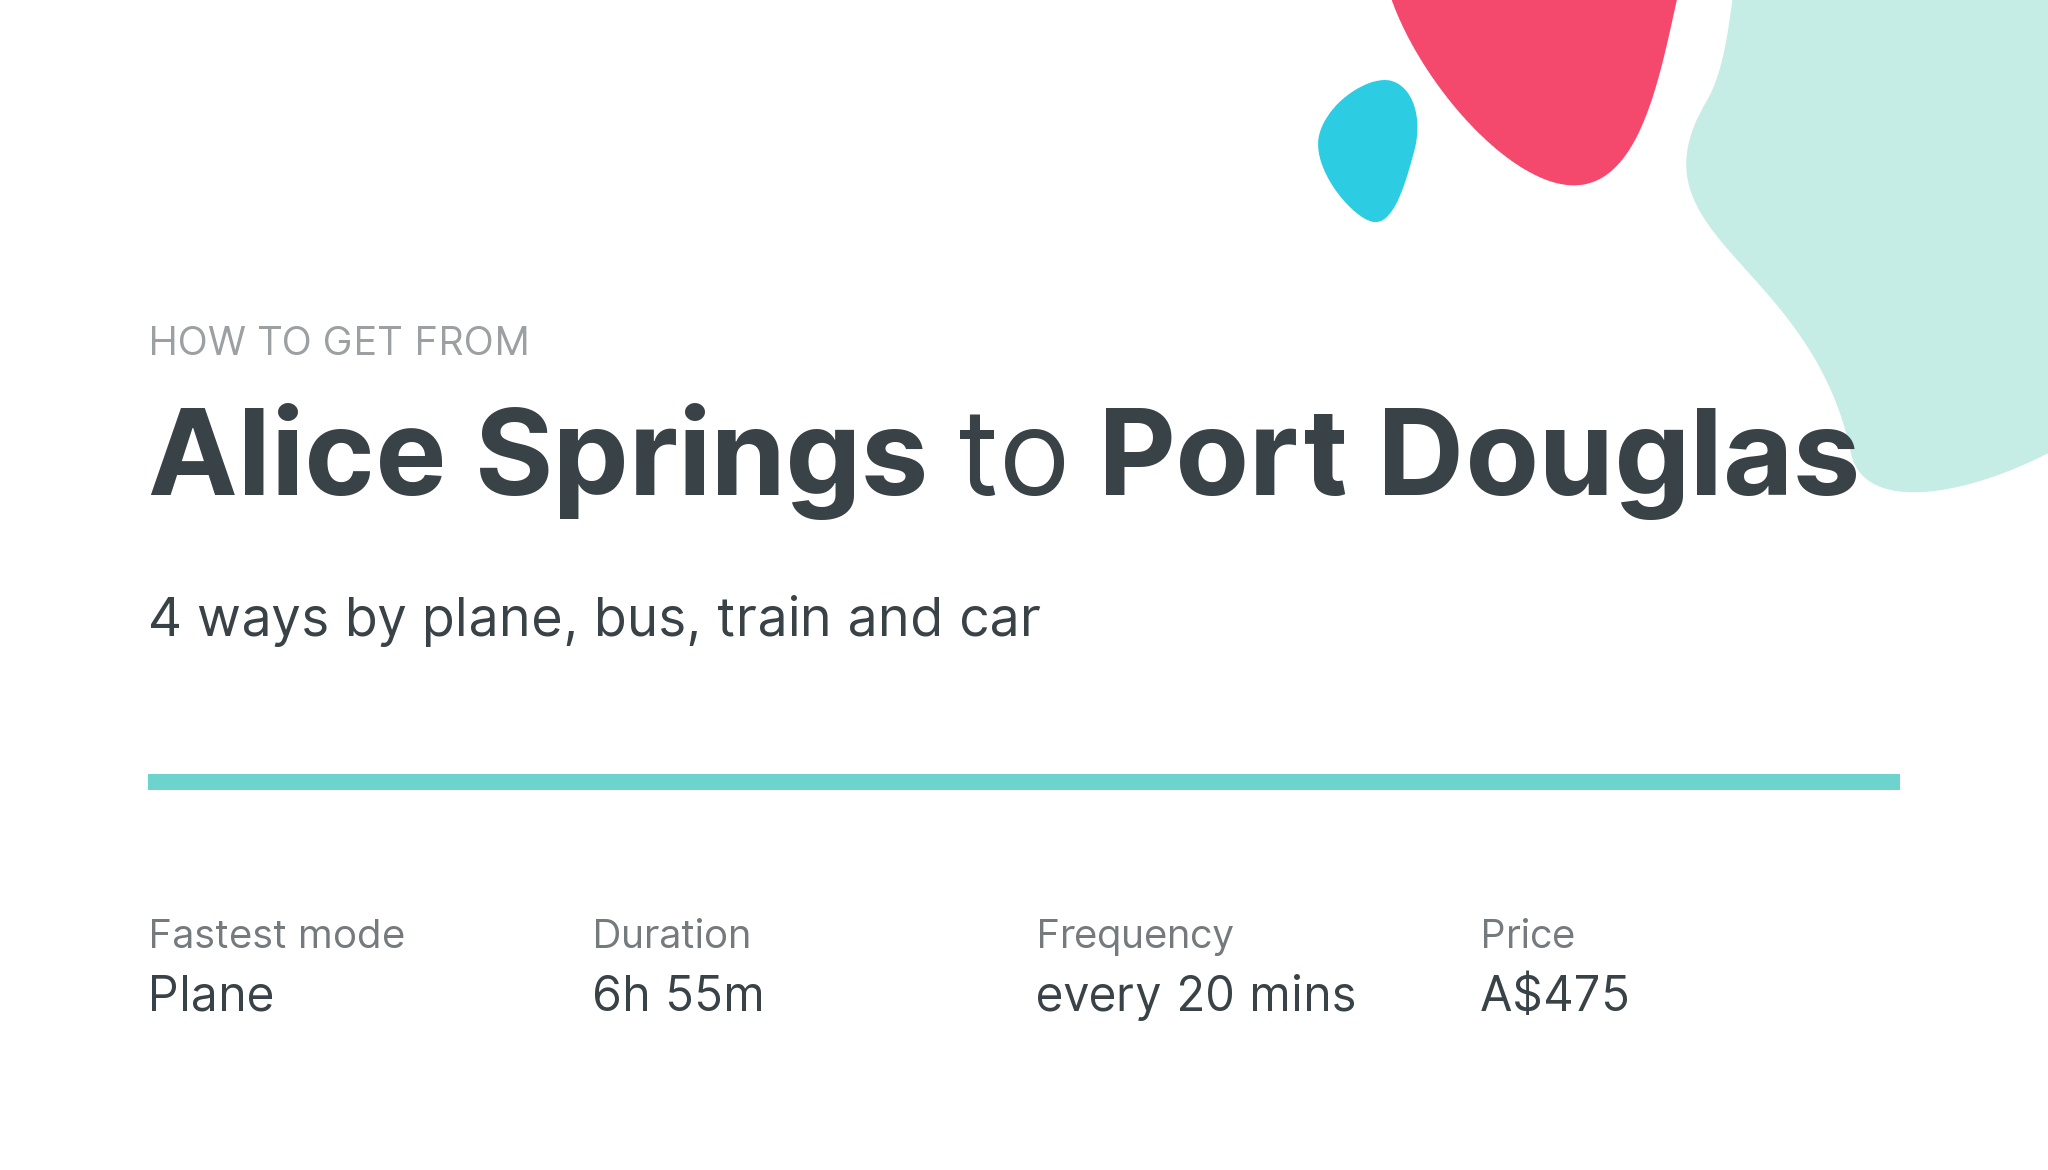 How do I get from Alice Springs to Port Douglas